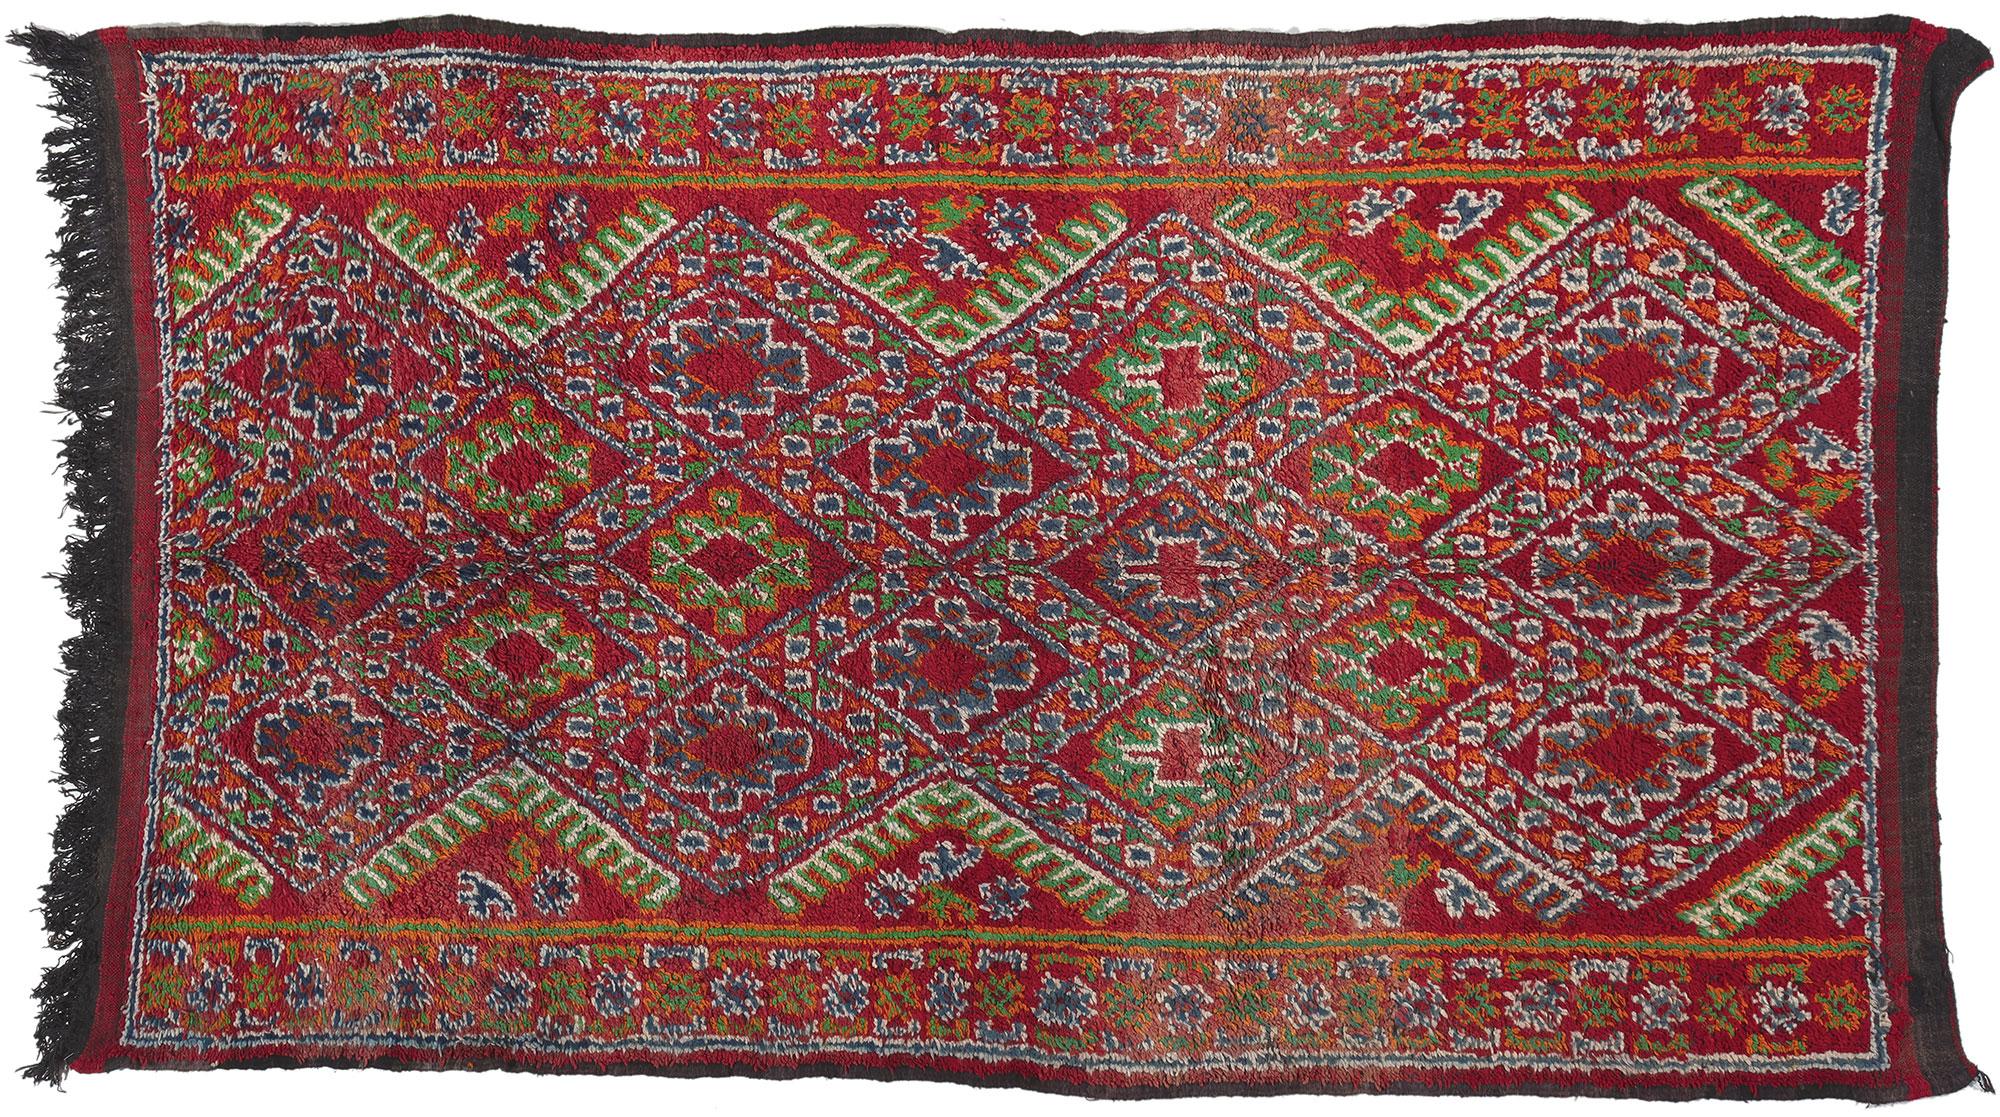 Vintage Red Beni MGuild Moroccan Rug, Midcentury Modern Meets Tribal Enchantment For Sale 3